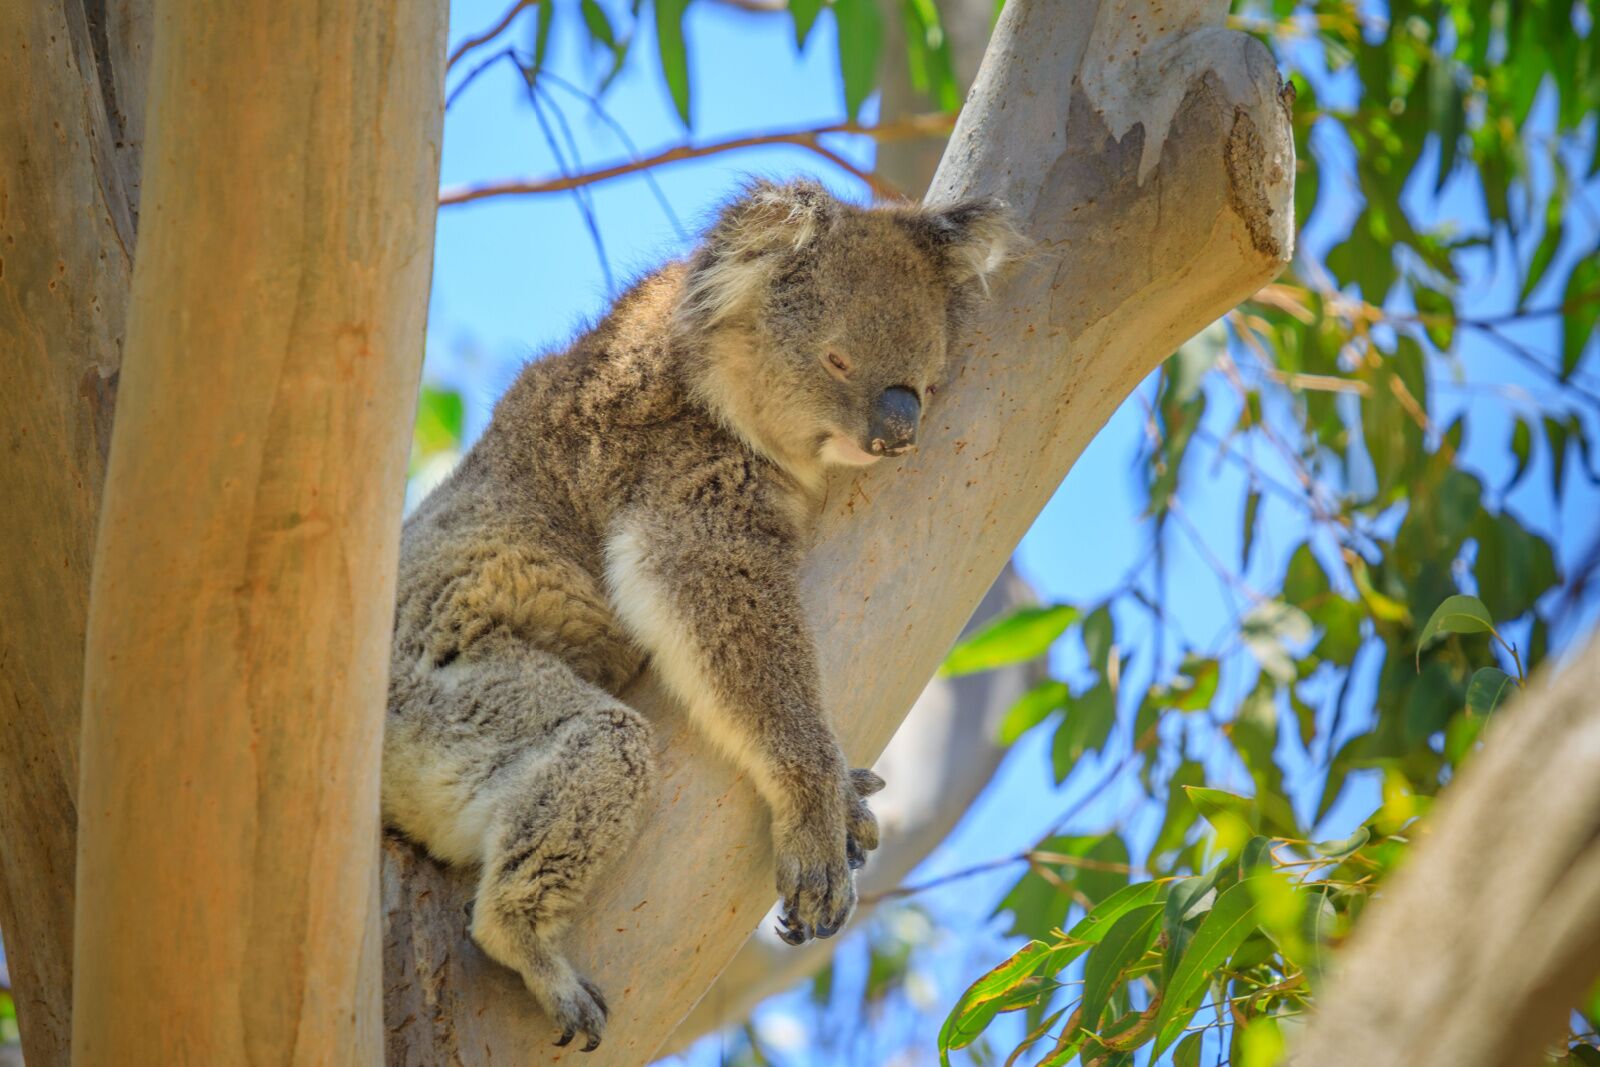 Koala at a national park in perth, australia